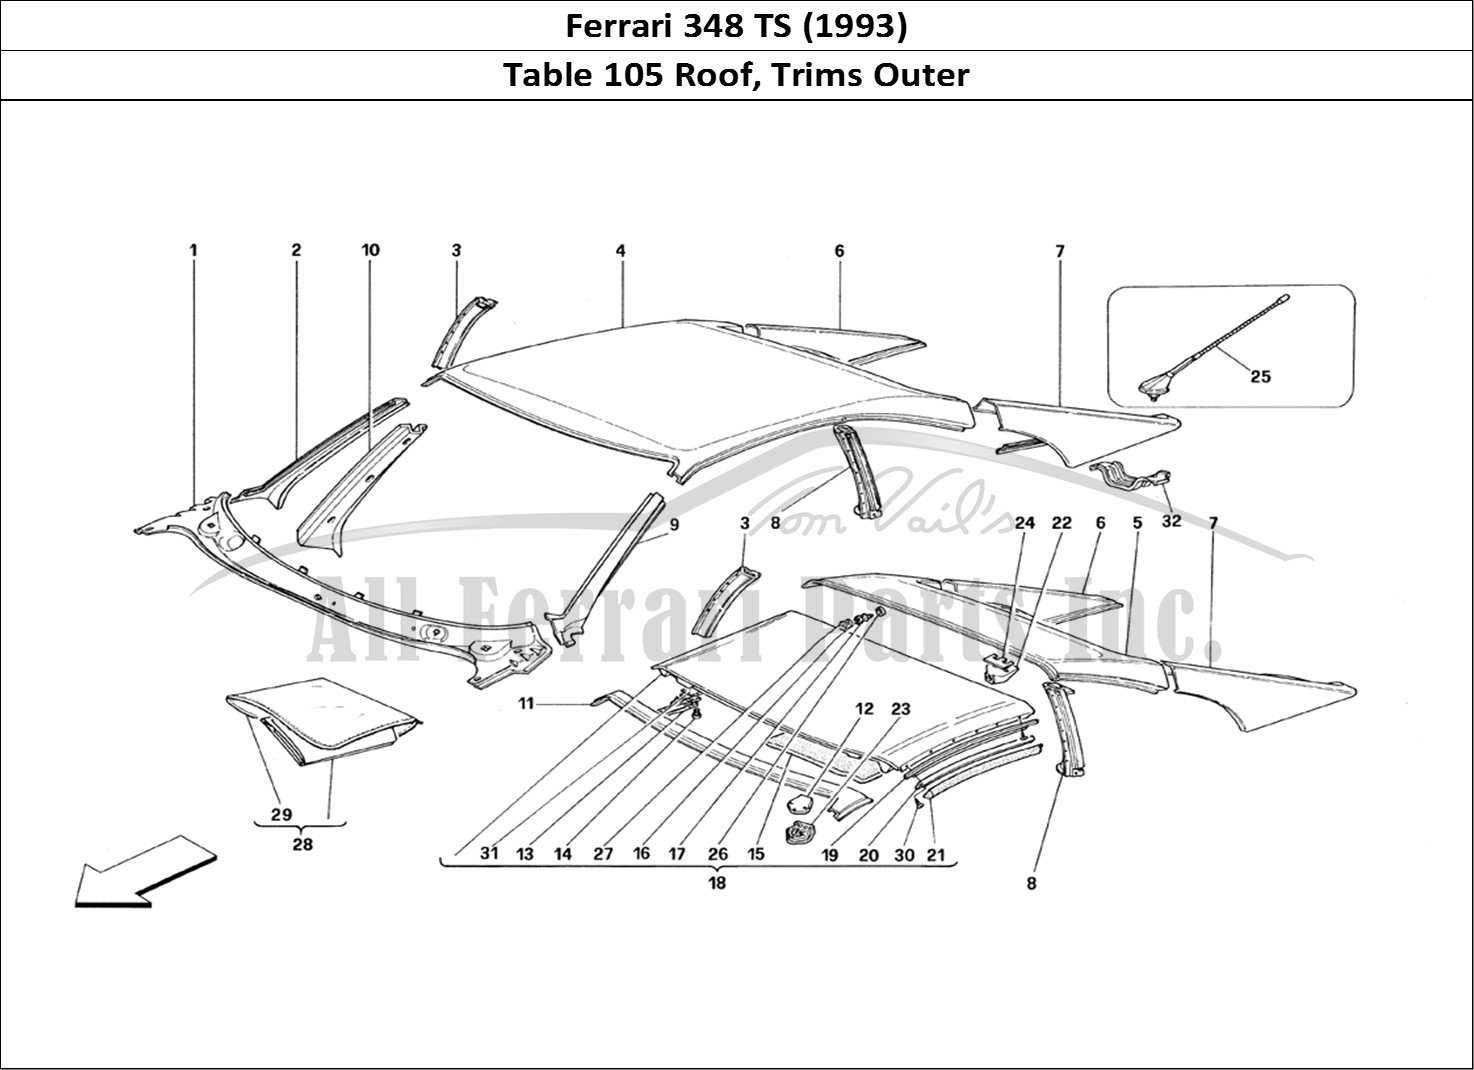 Ferrari Parts Ferrari 348 TB (1993) Page 105 Roof - Outer Trims